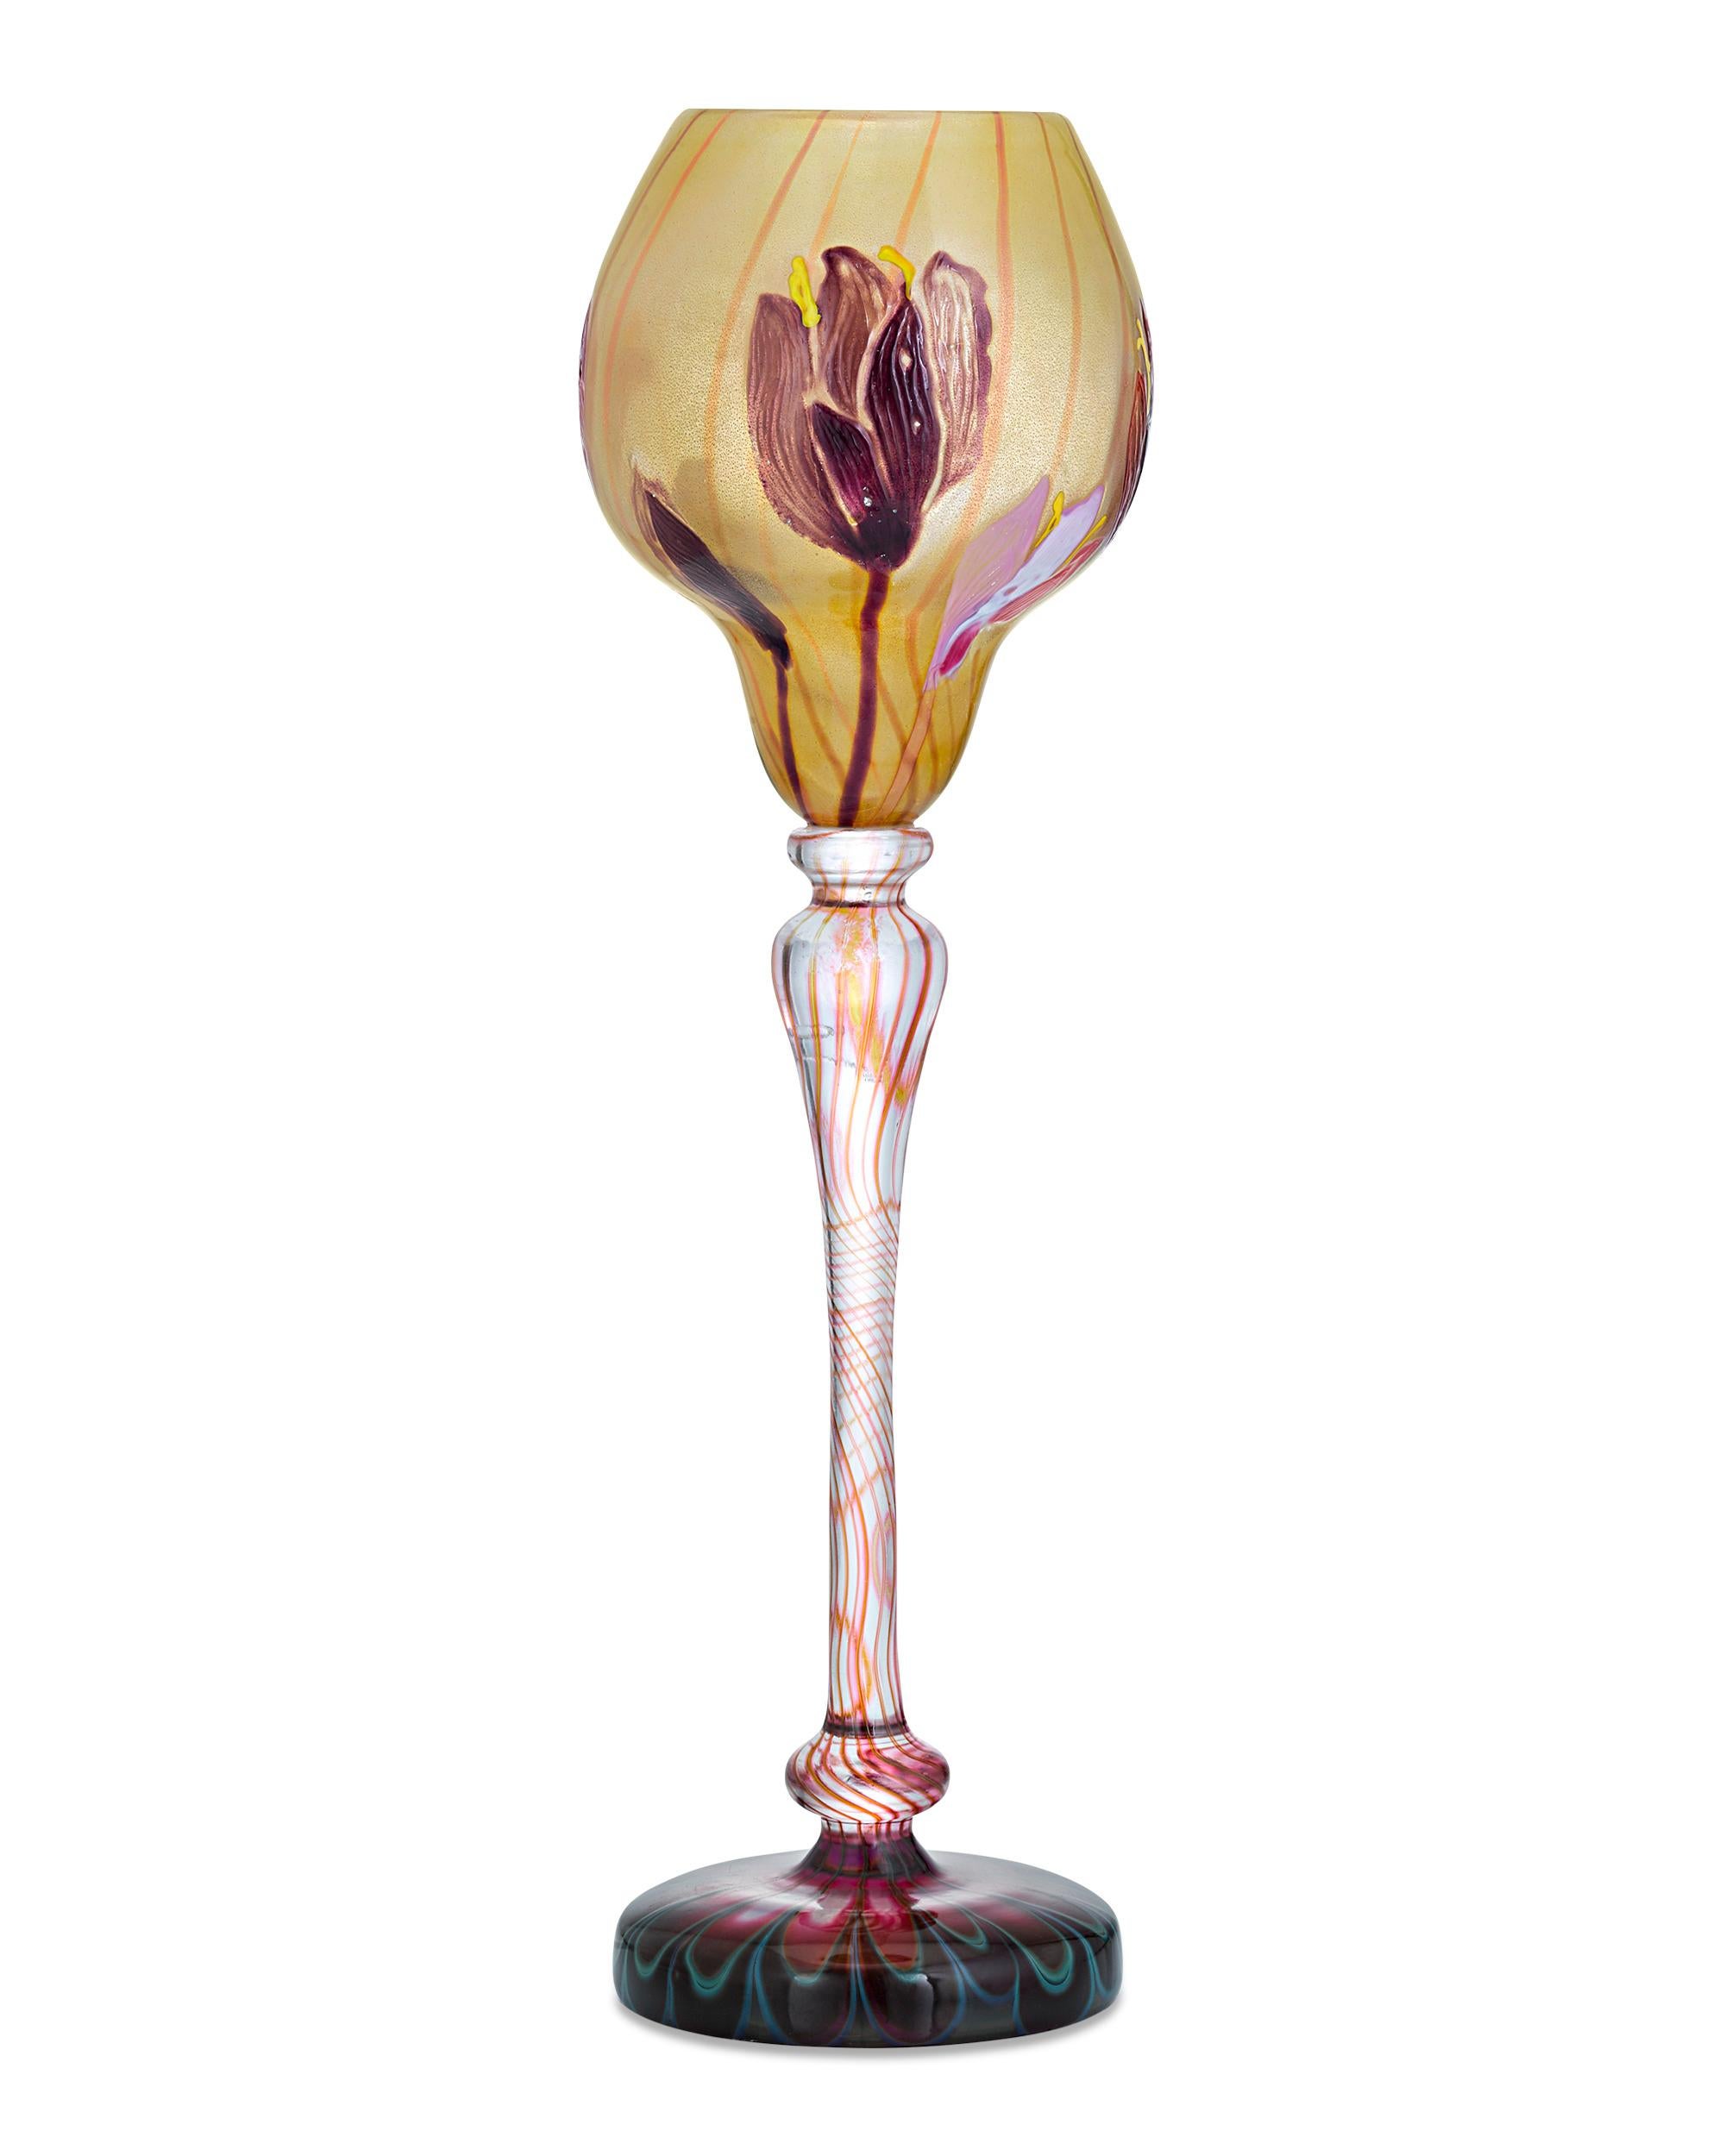 French Exhibition Art Glass Vase by Émile Gallé